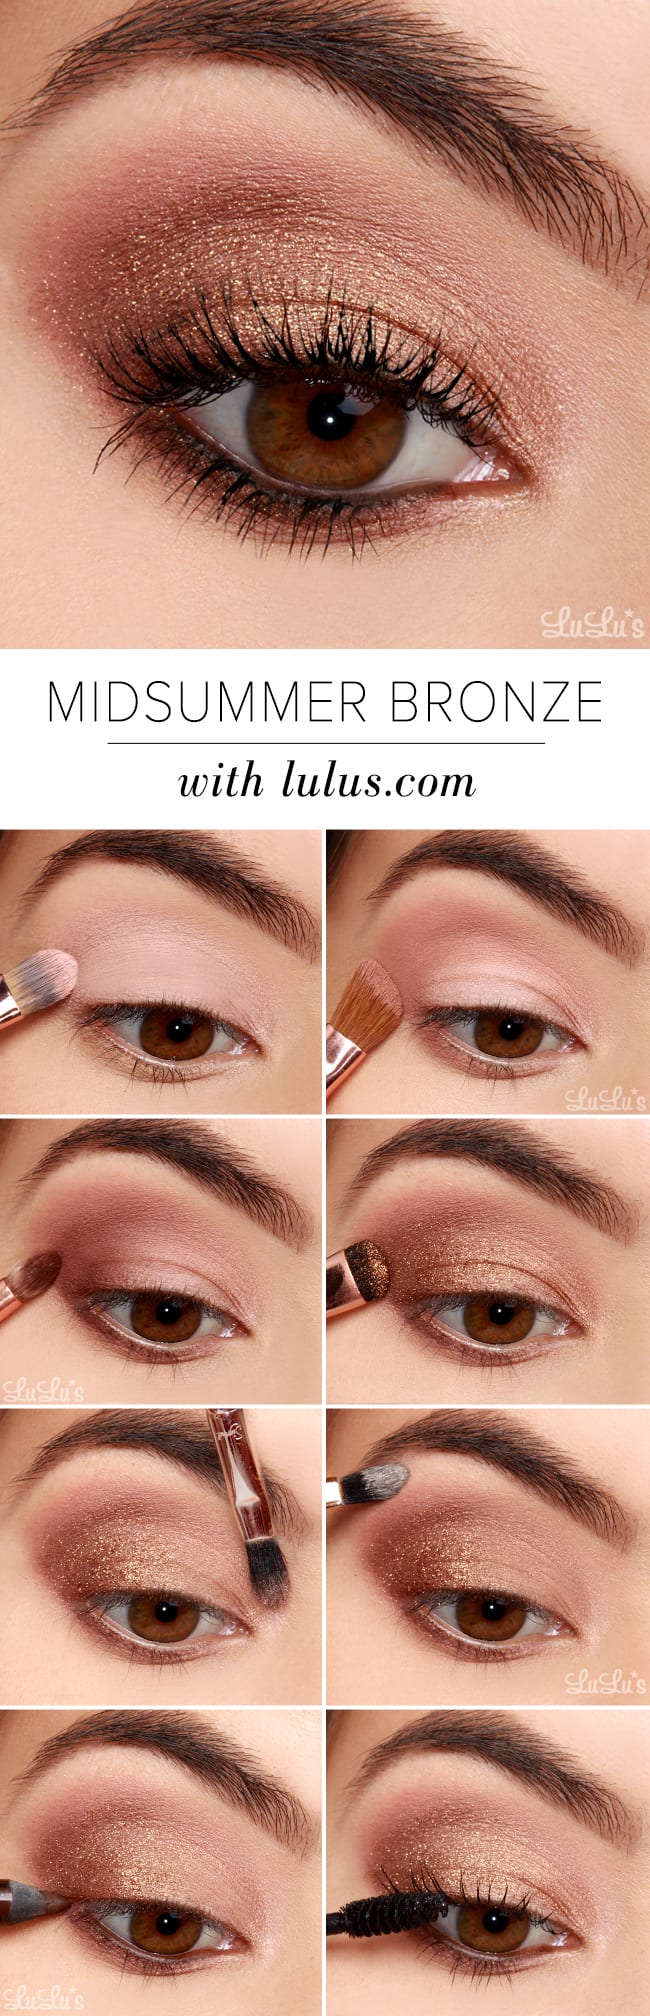 Lulus How-To: Midsummer Bronze Eyeshadow - Lulus.com Fashion Blog